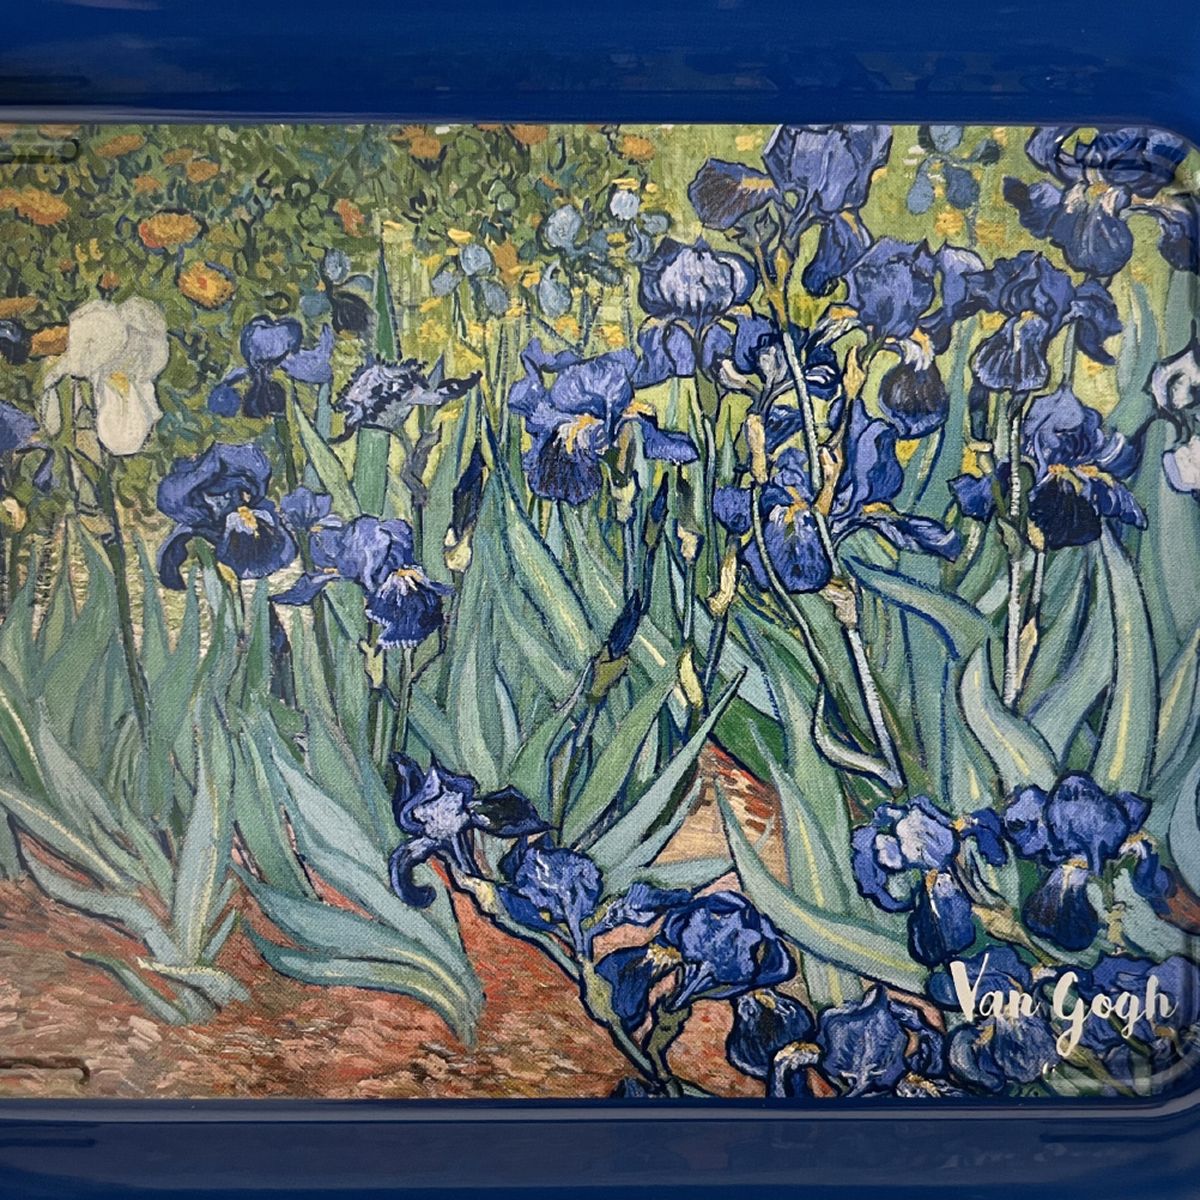 Plateau vide poche Van Gogh 21 x 14 cm